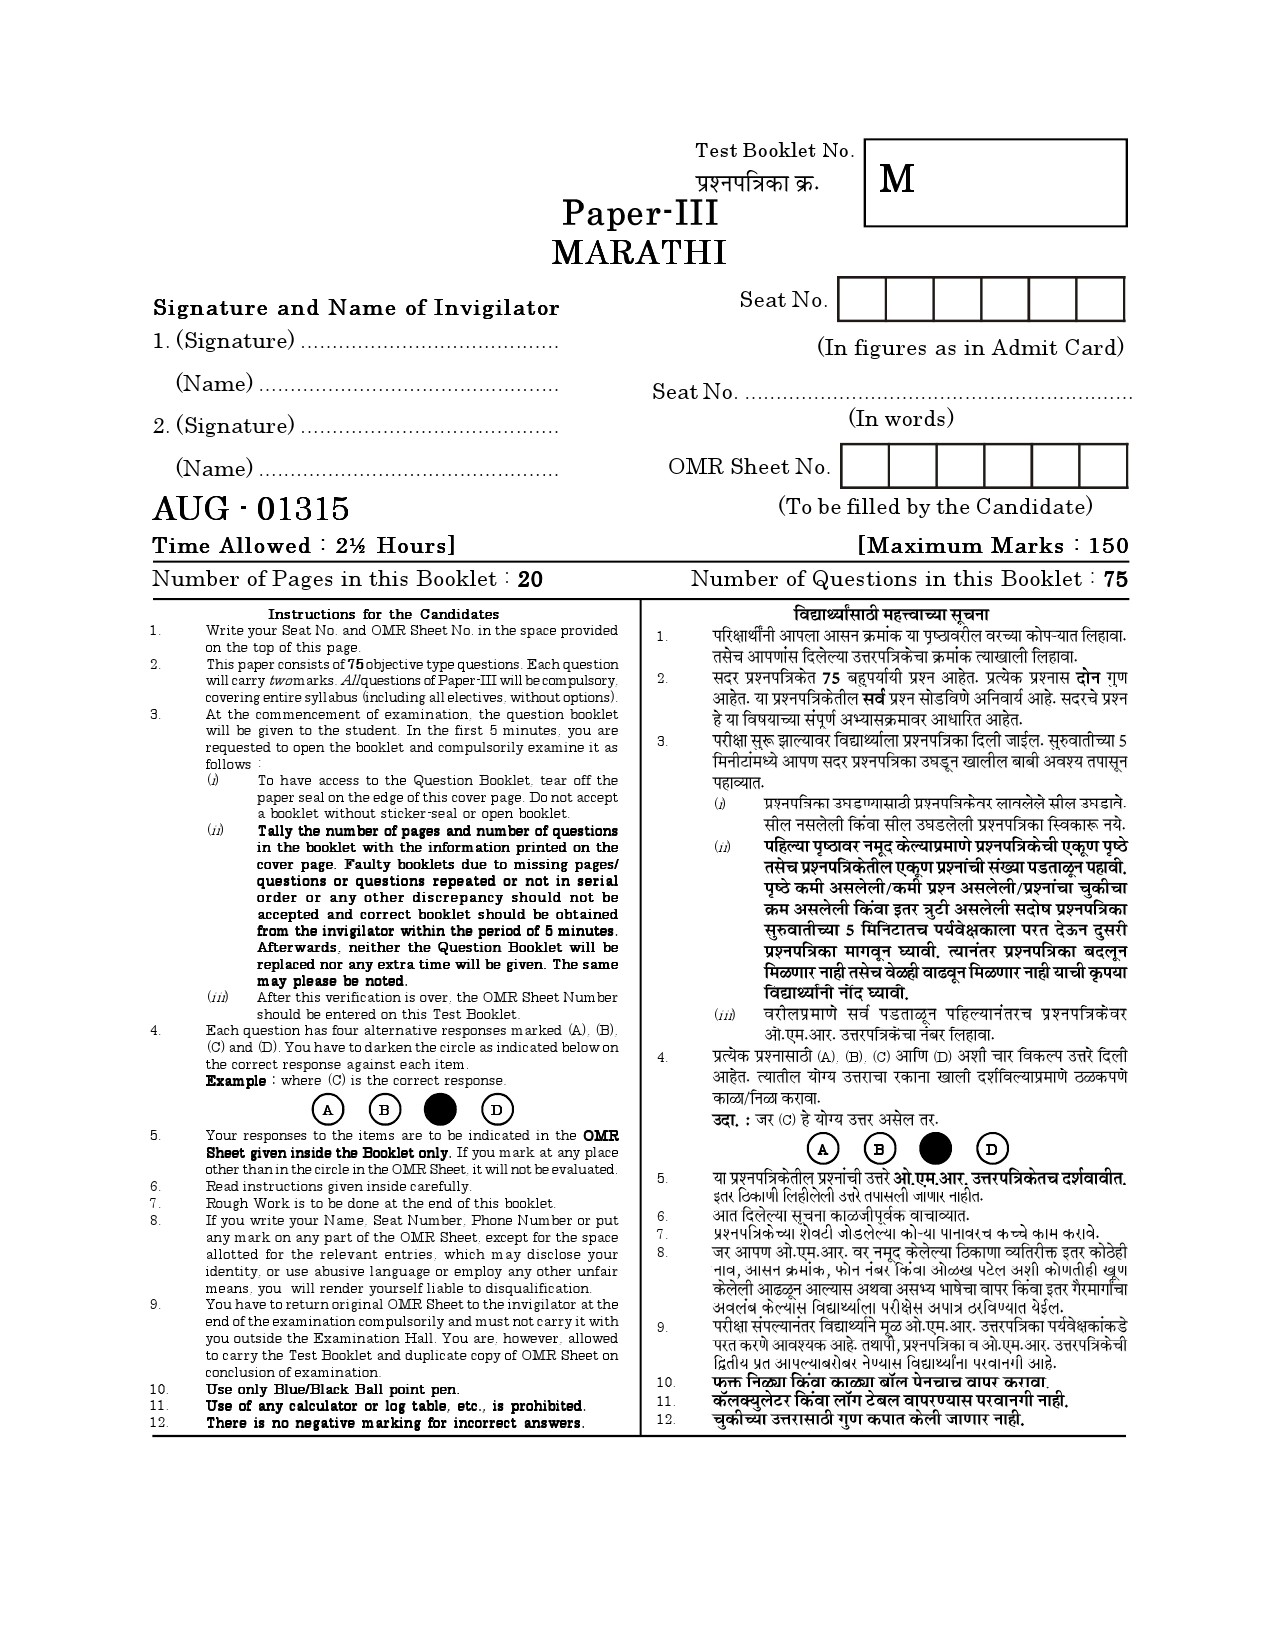 Maharashtra SET Marathi Question Paper III August 2015 1